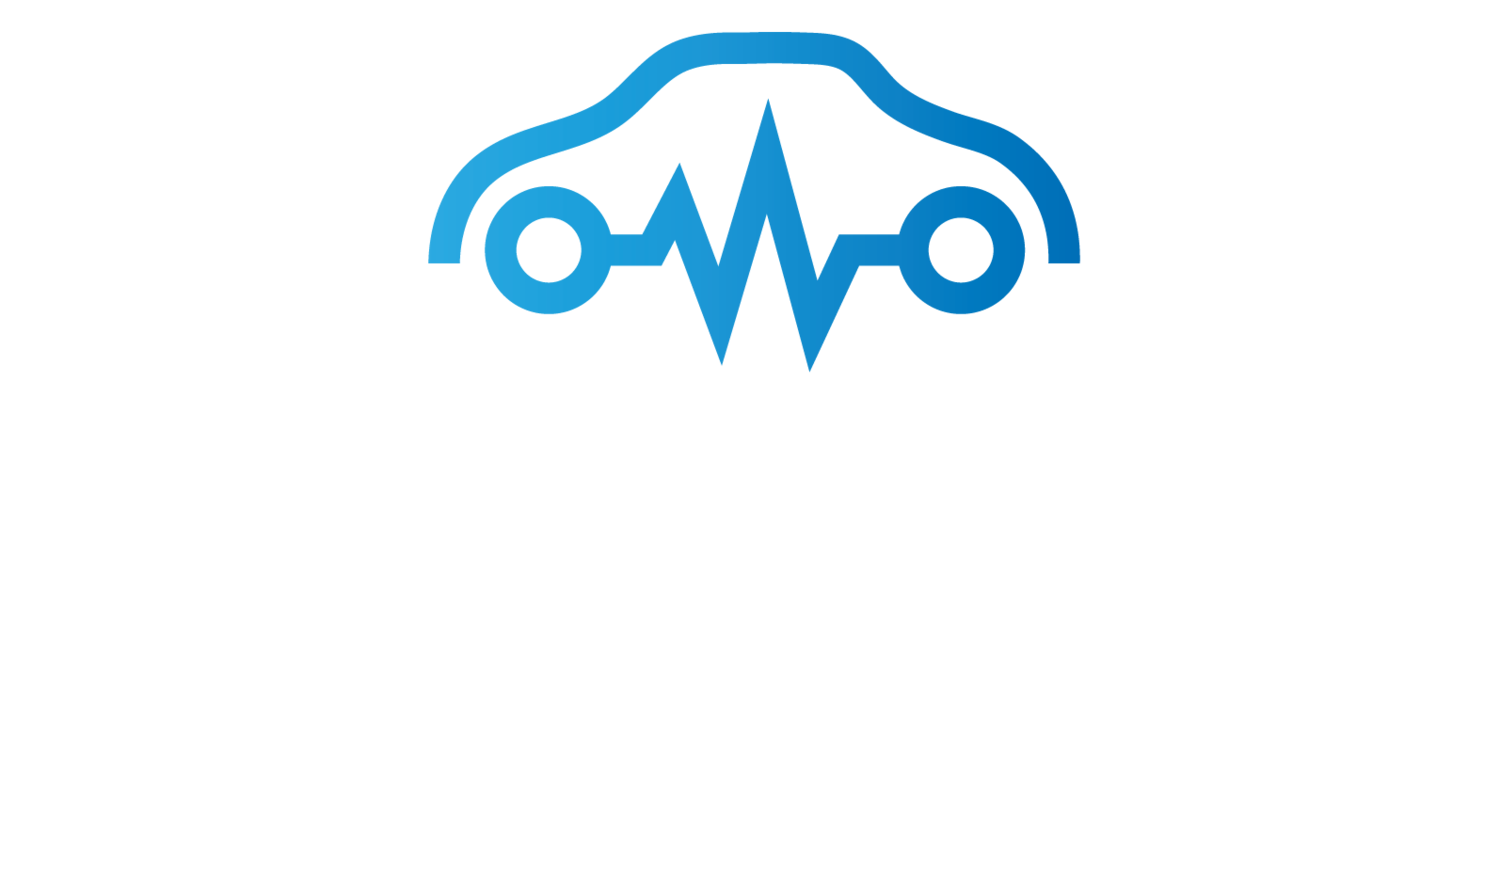 The Automotive Expert